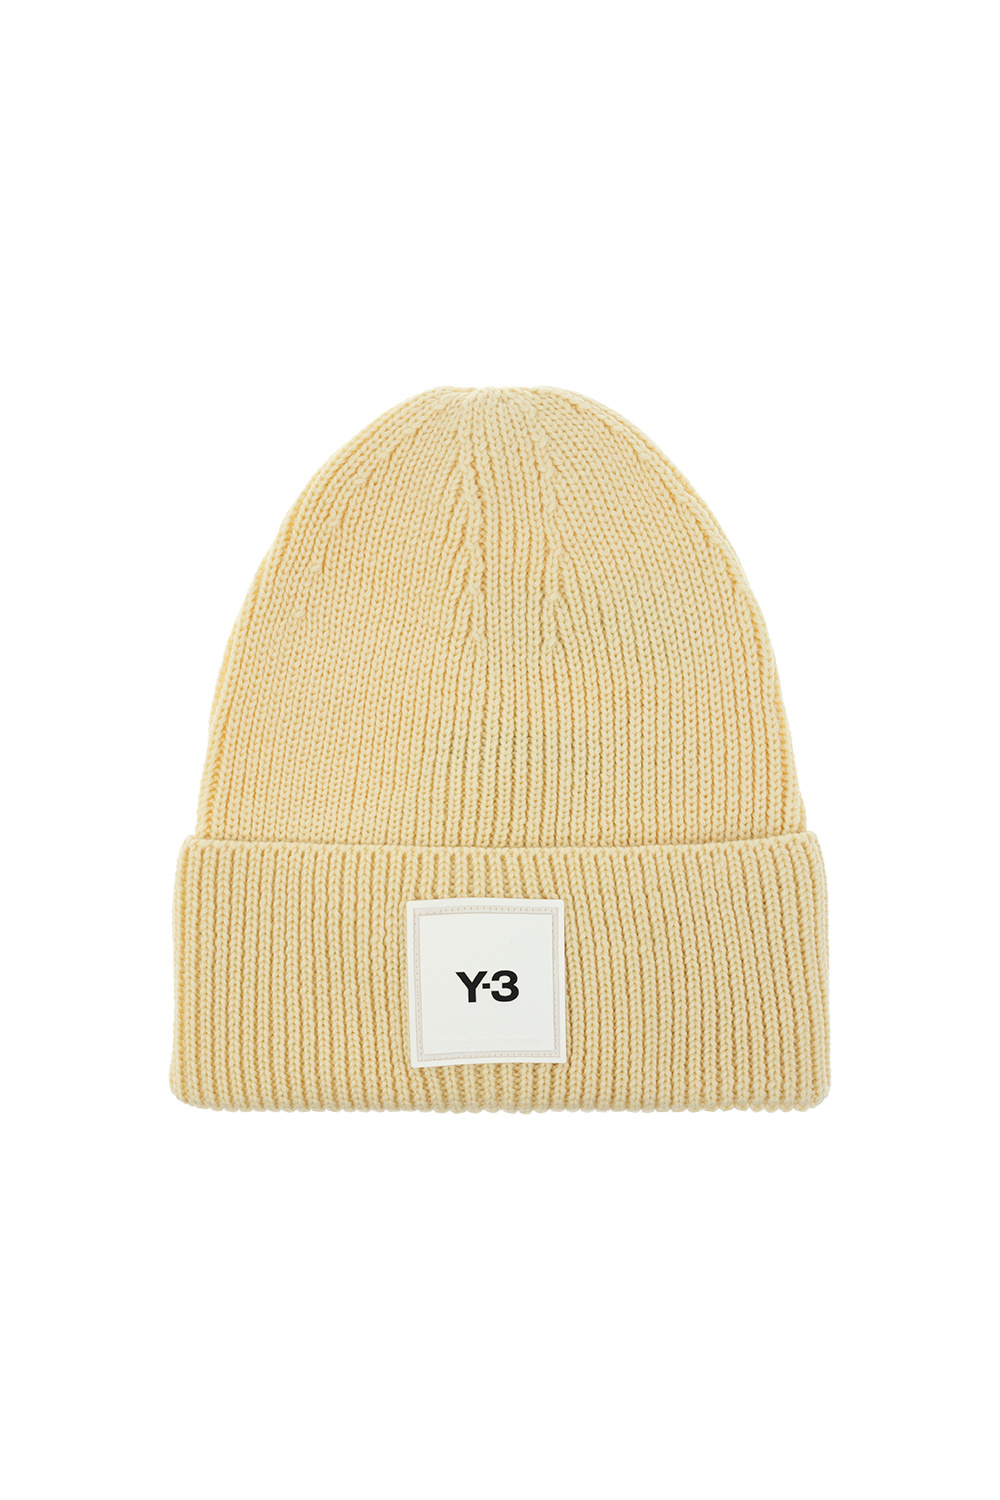 黄色羊毛套头帽Y-3 Yohji Yamamoto - IetpShops 中国